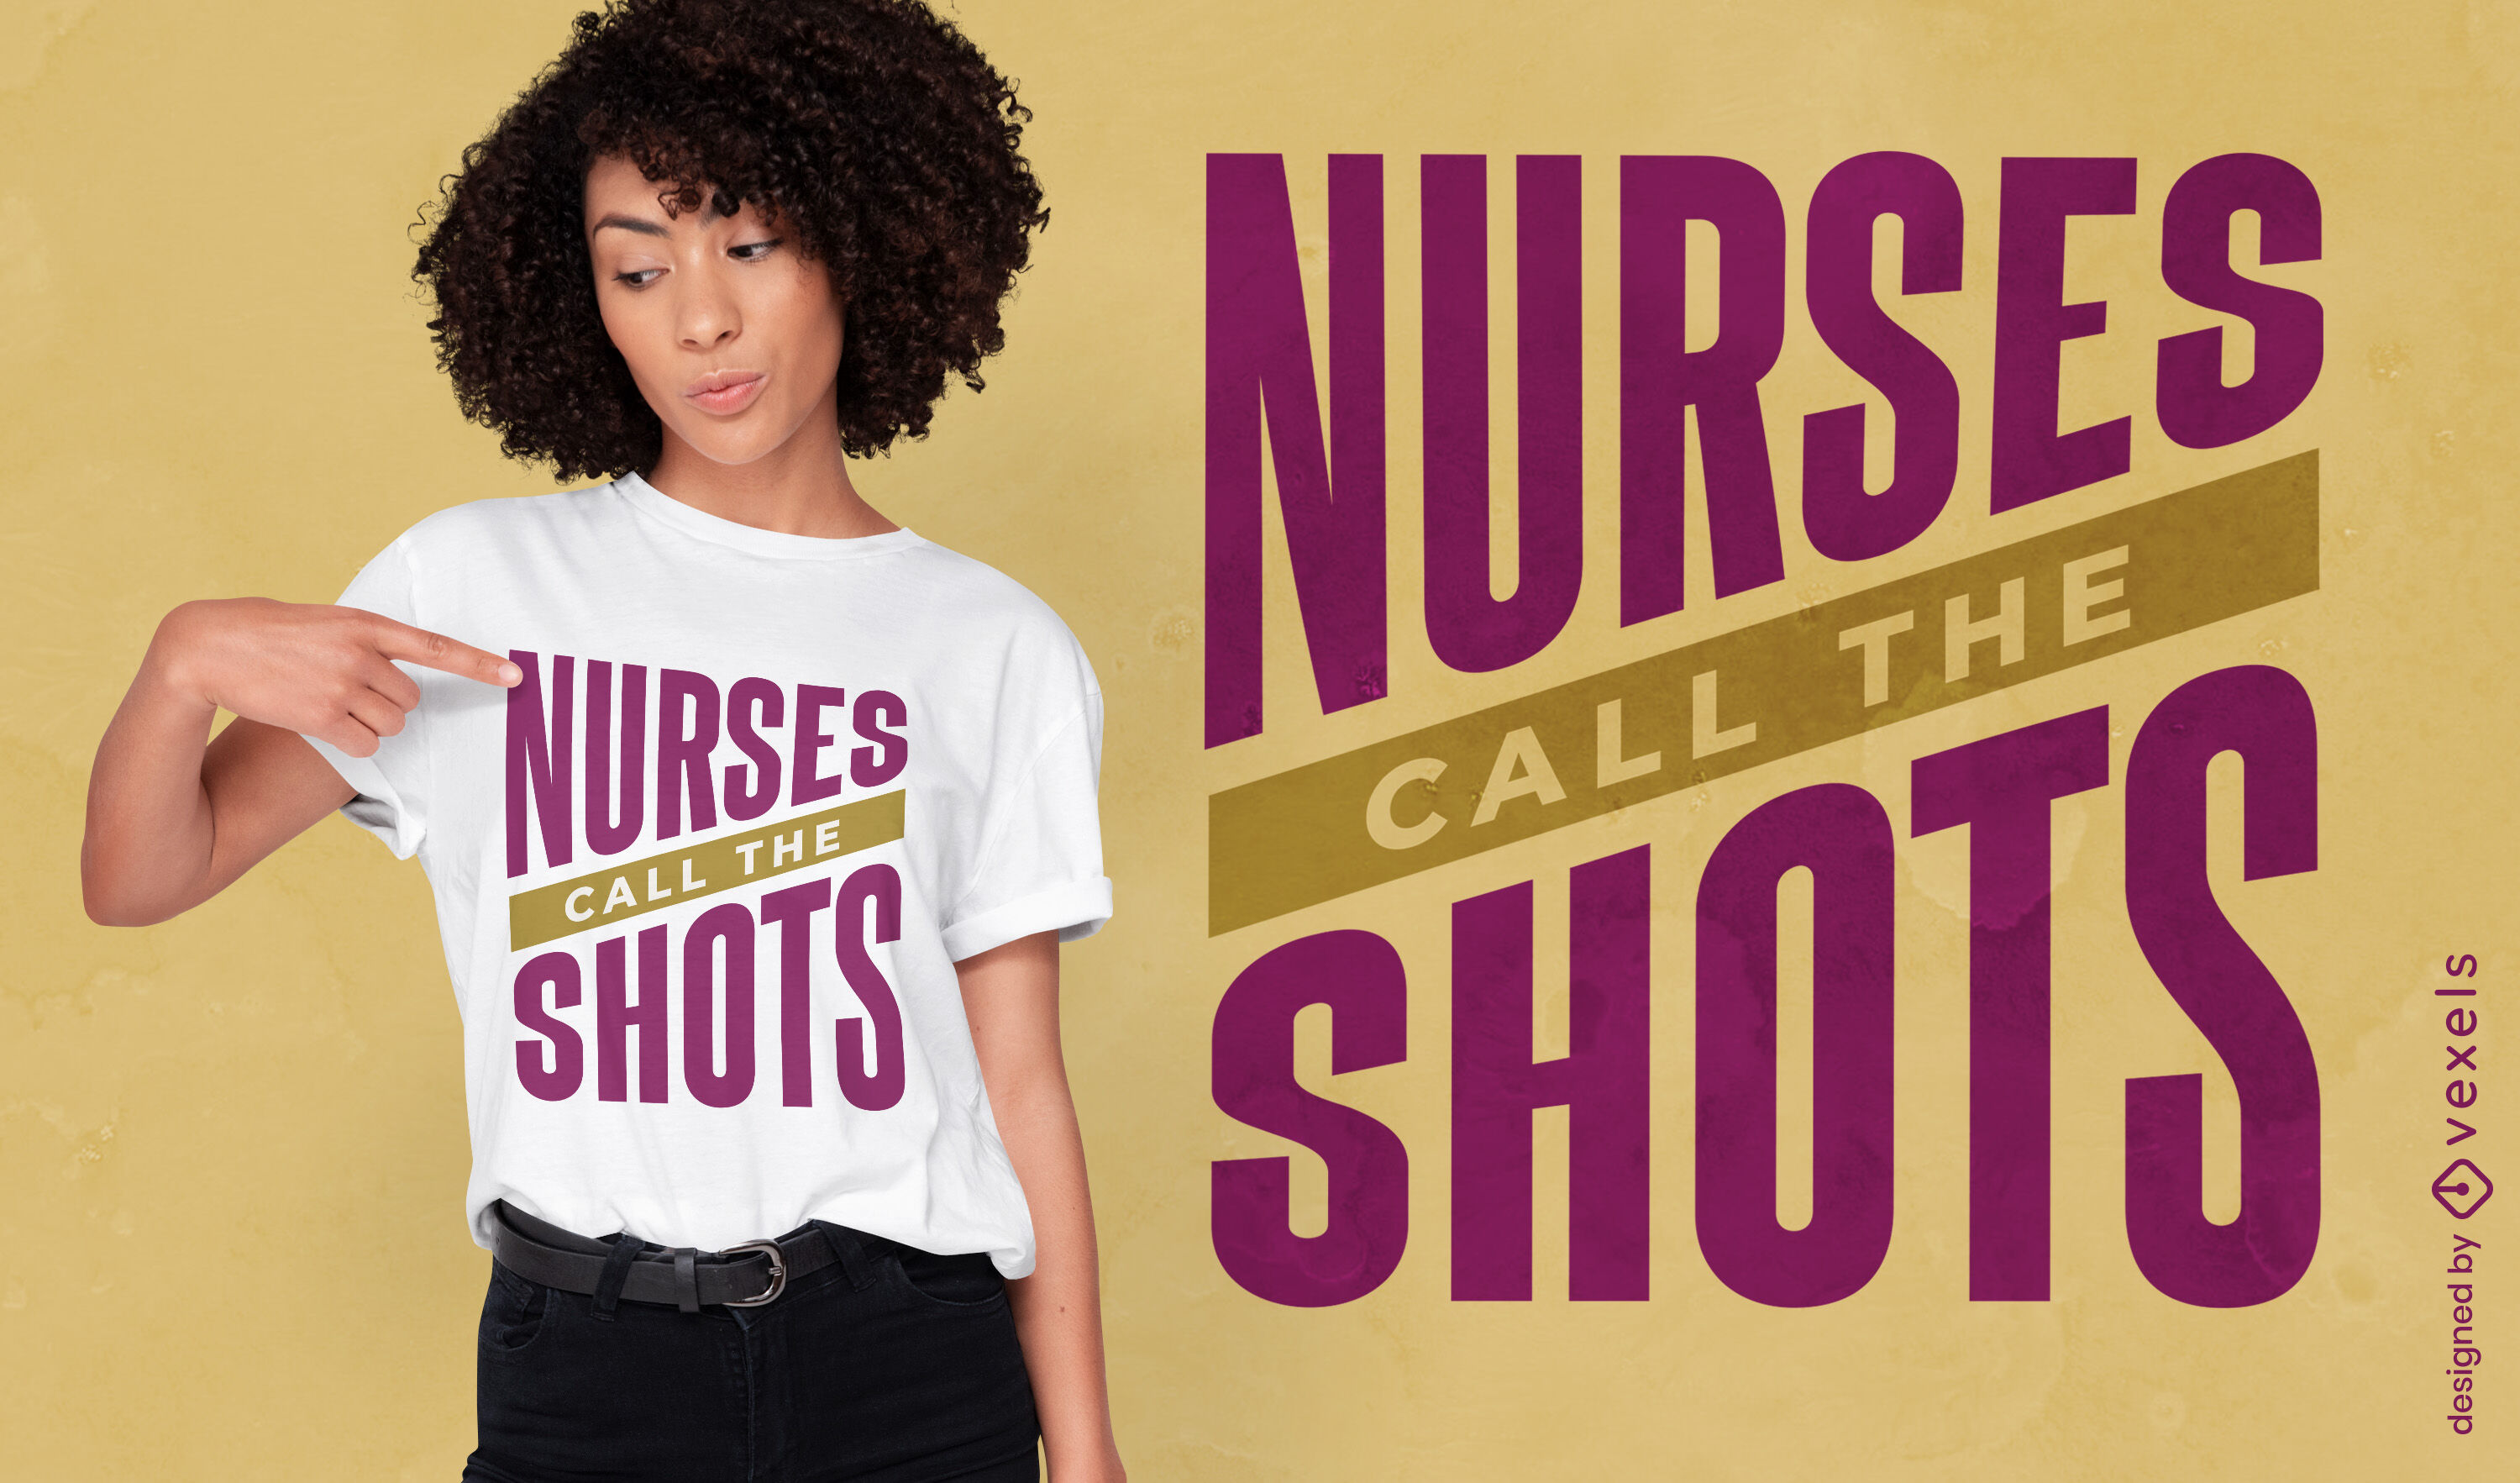 Nurses call the shots t-shirt design